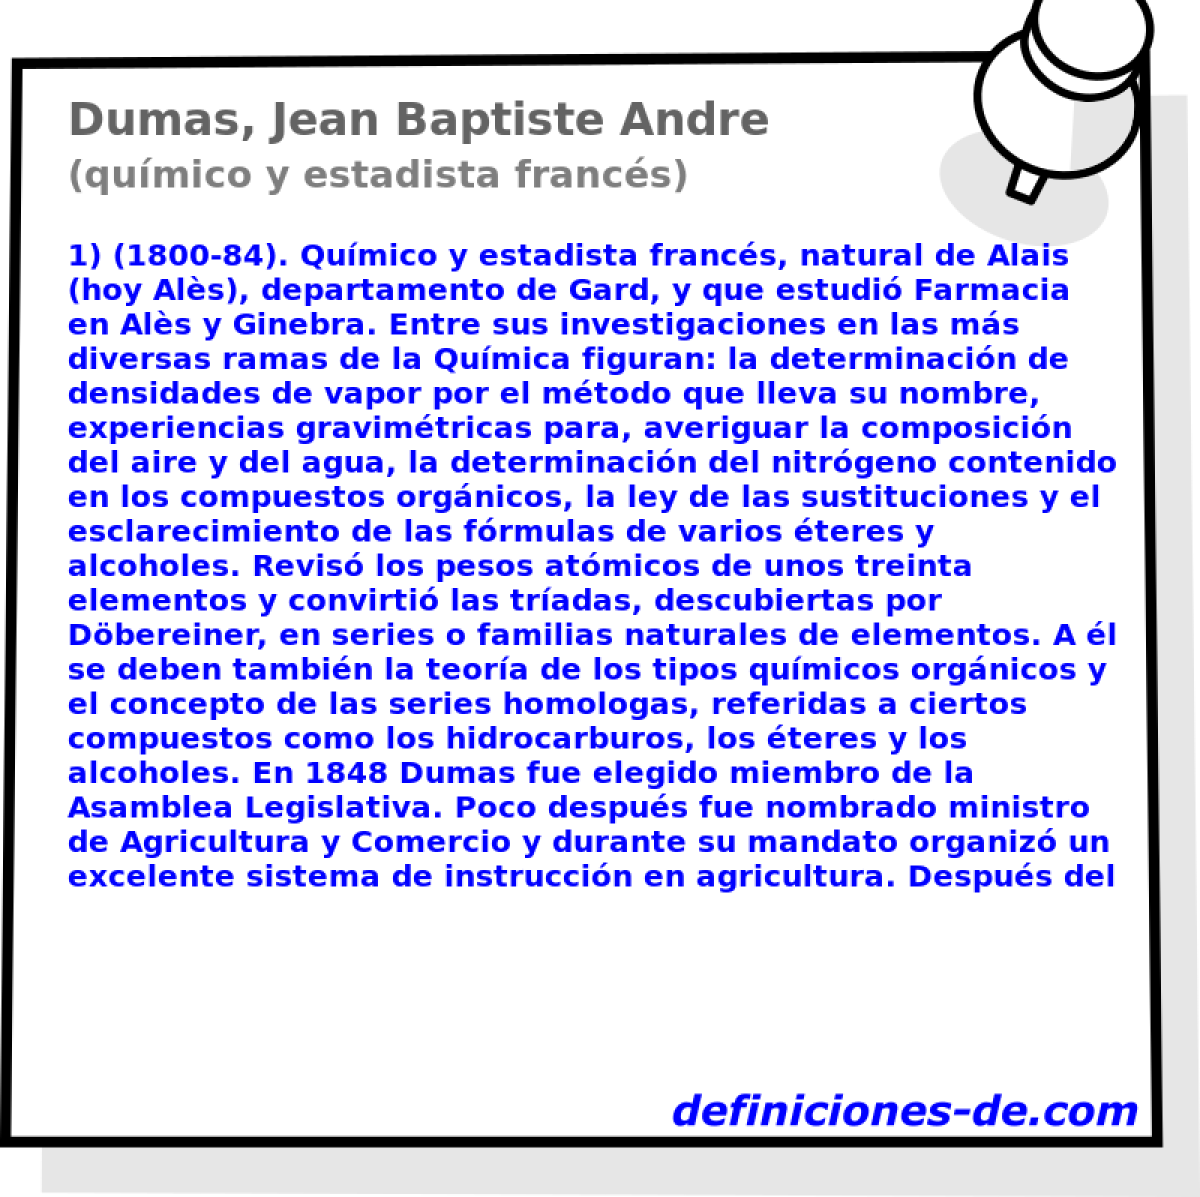 Dumas, Jean Baptiste Andre (qumico y estadista francs)